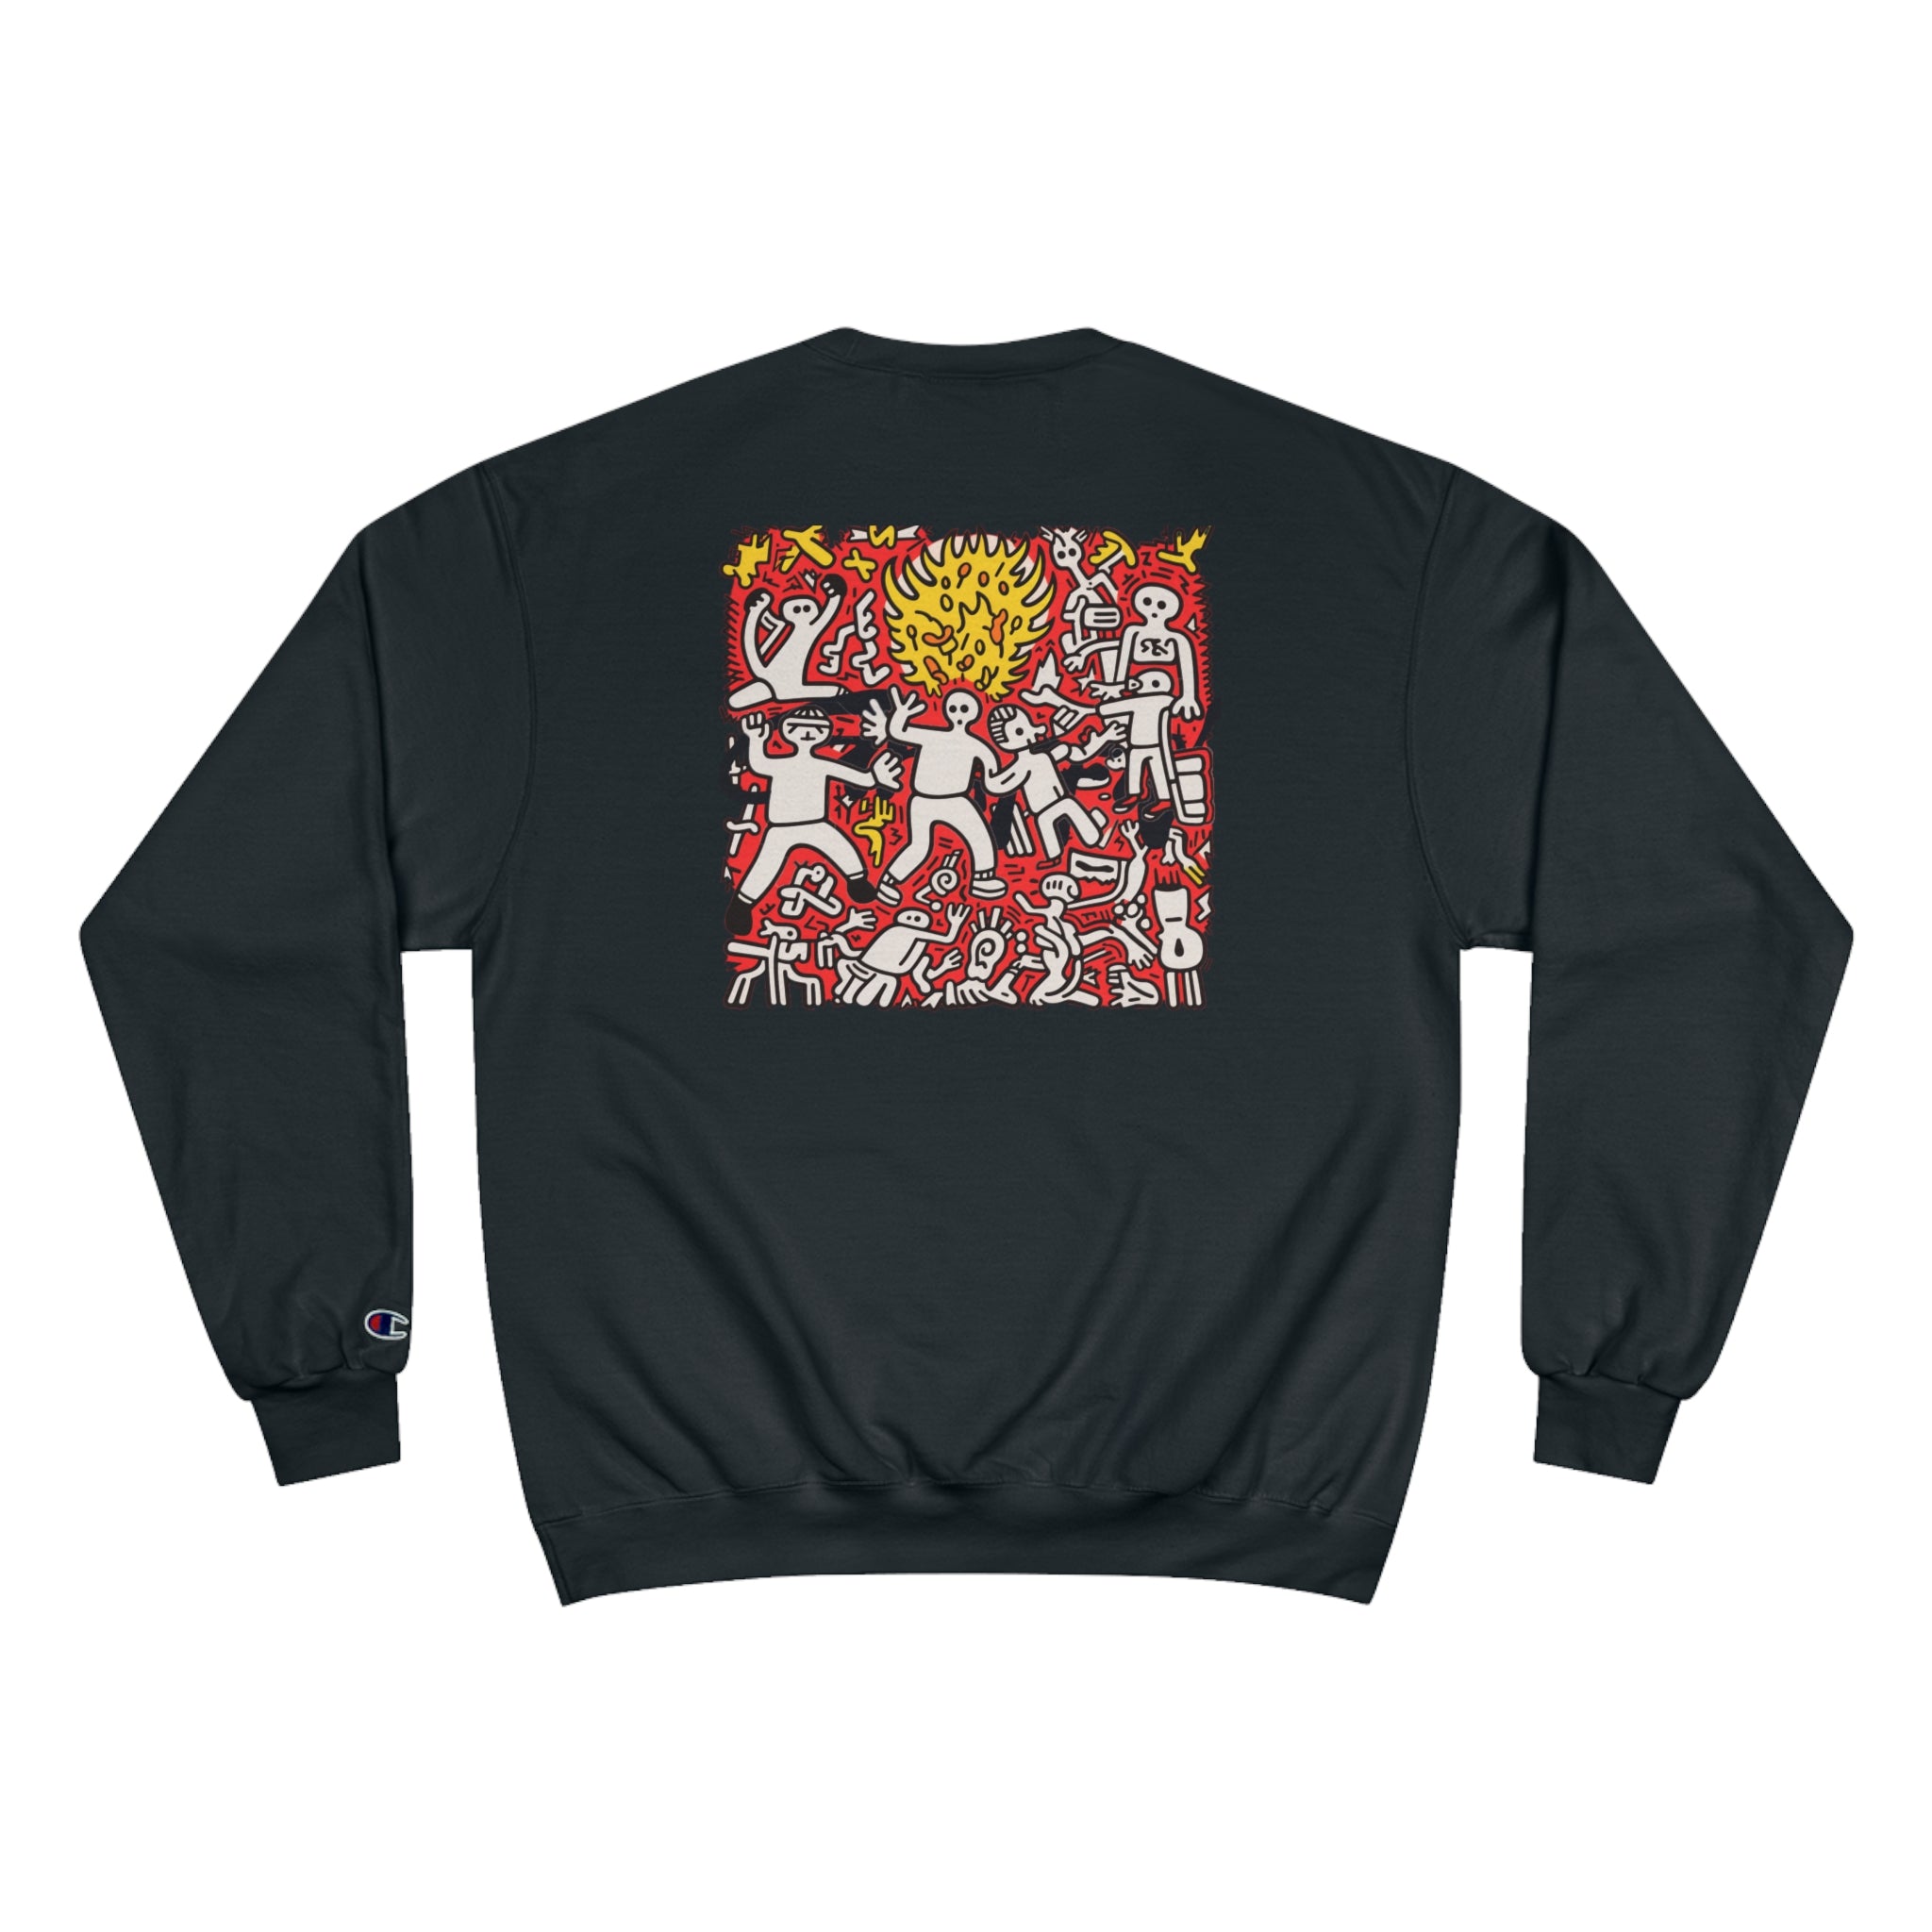 Urban Pulse: The vision of Peaceful Rebellion Sweatshirt